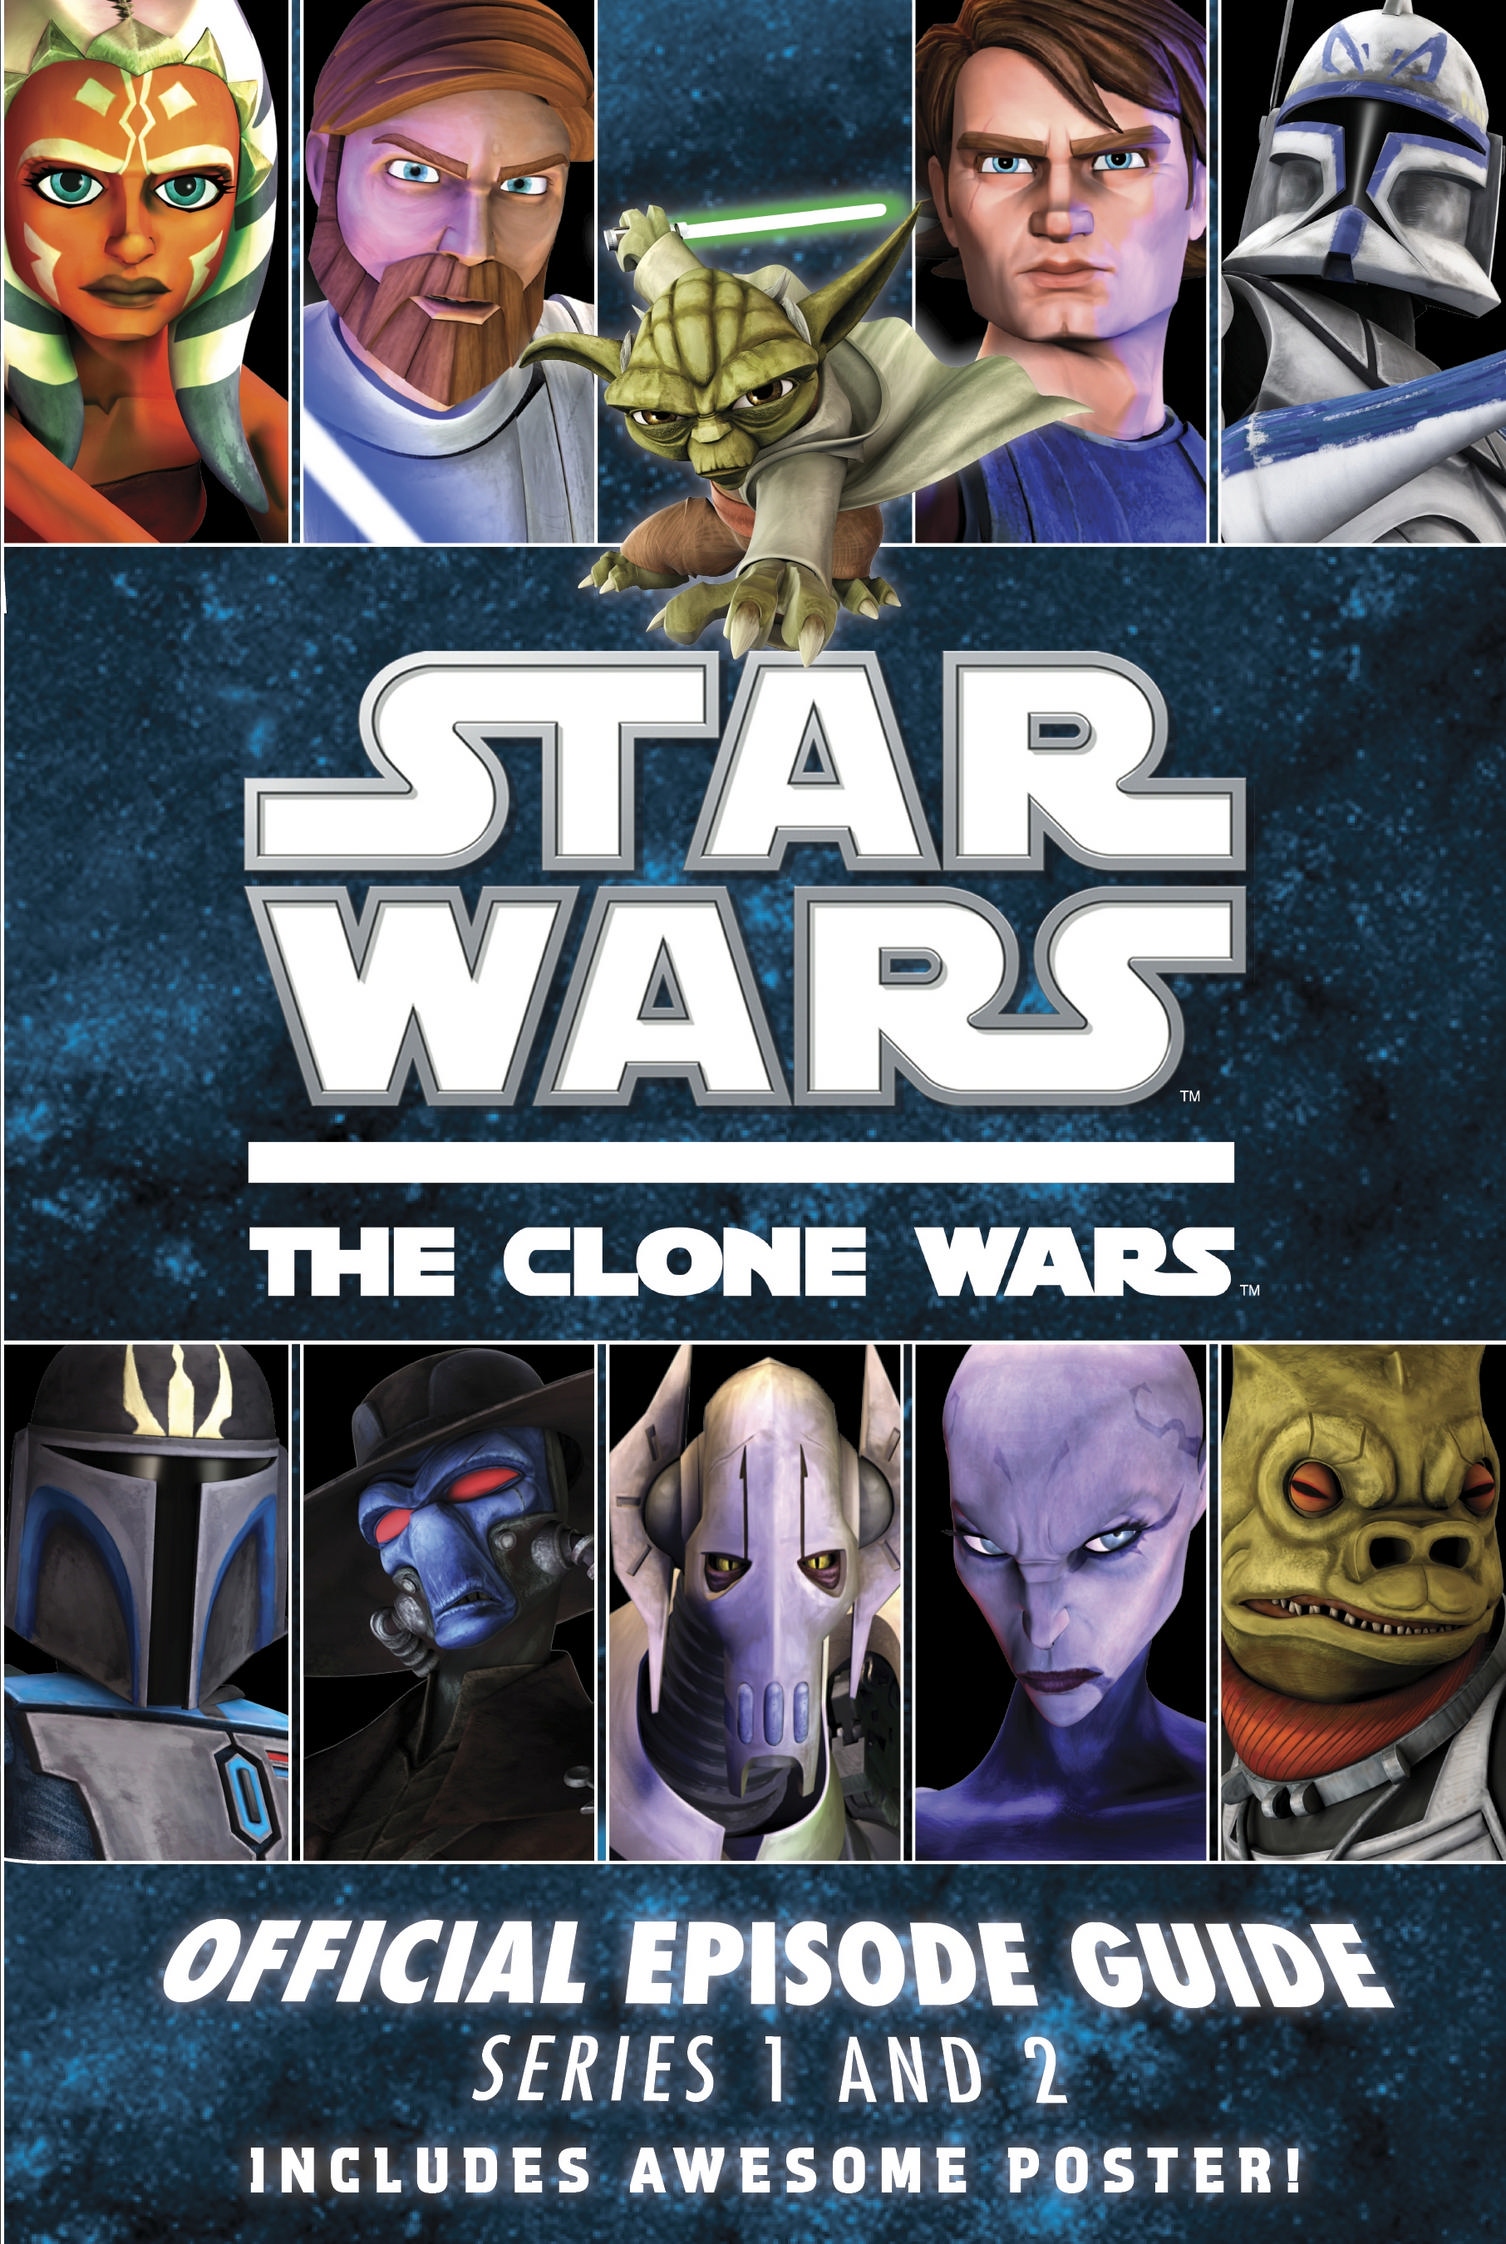 almost no clone wars content